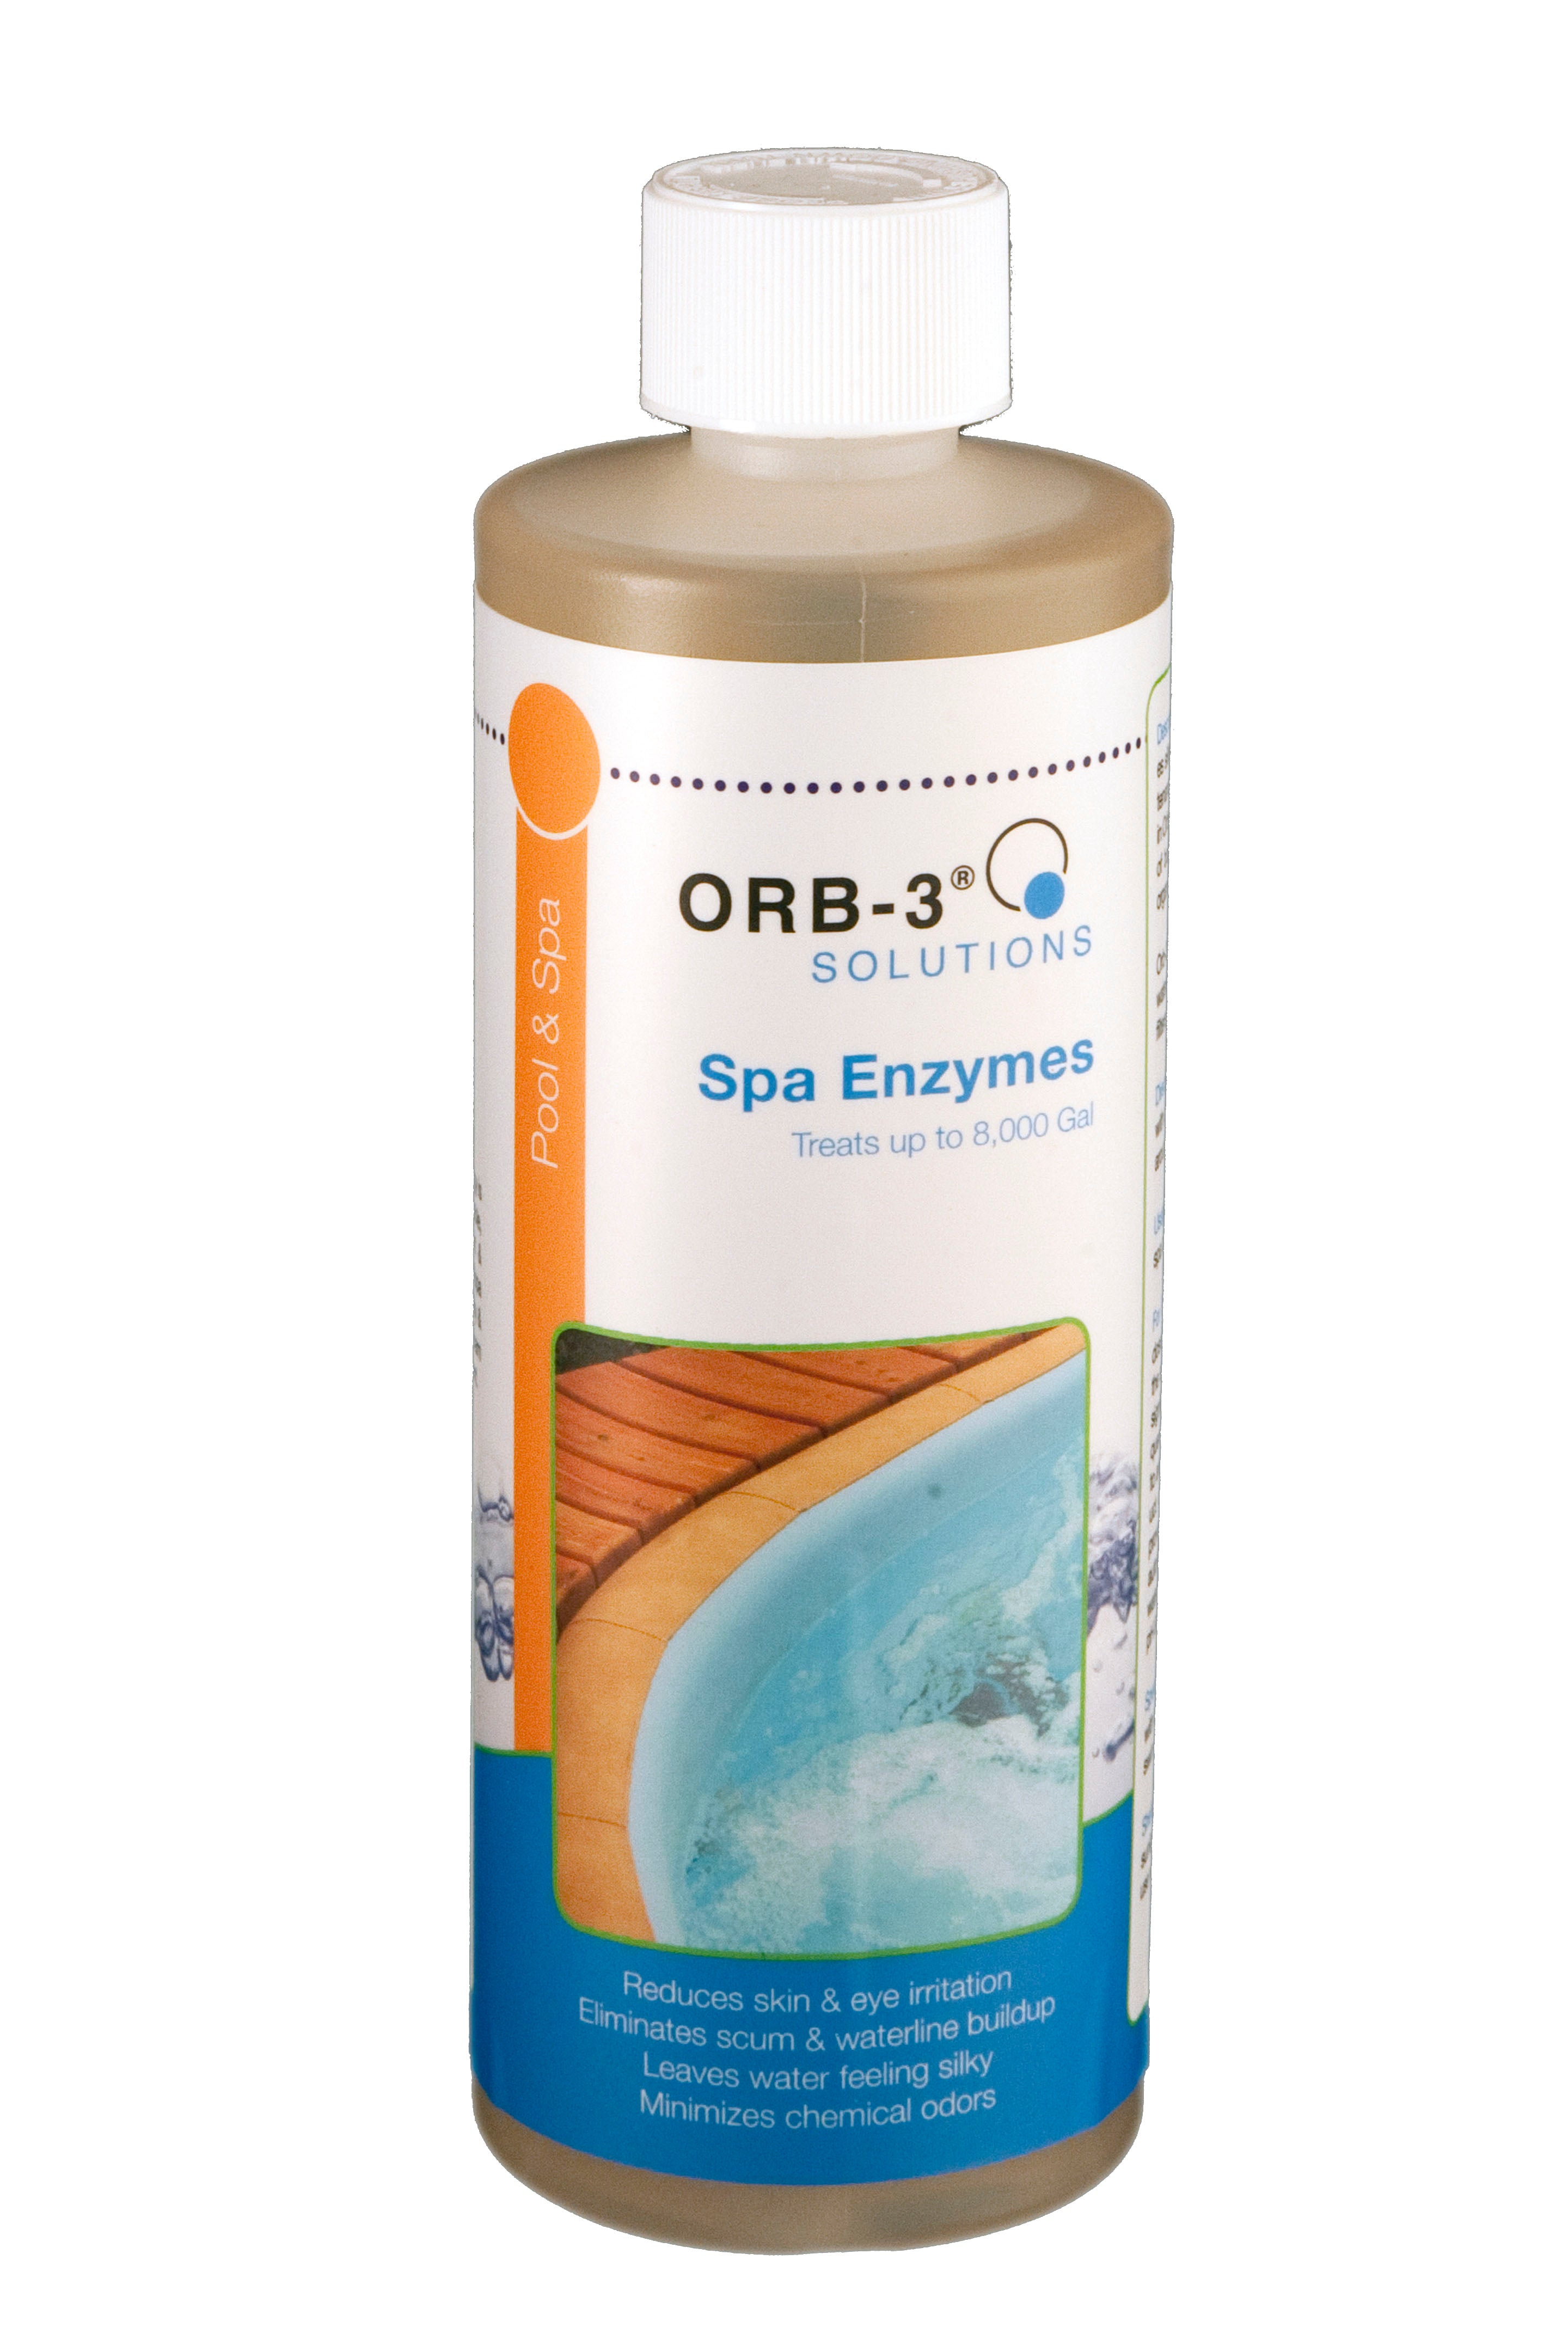 Orb-3 Spa Enzymes